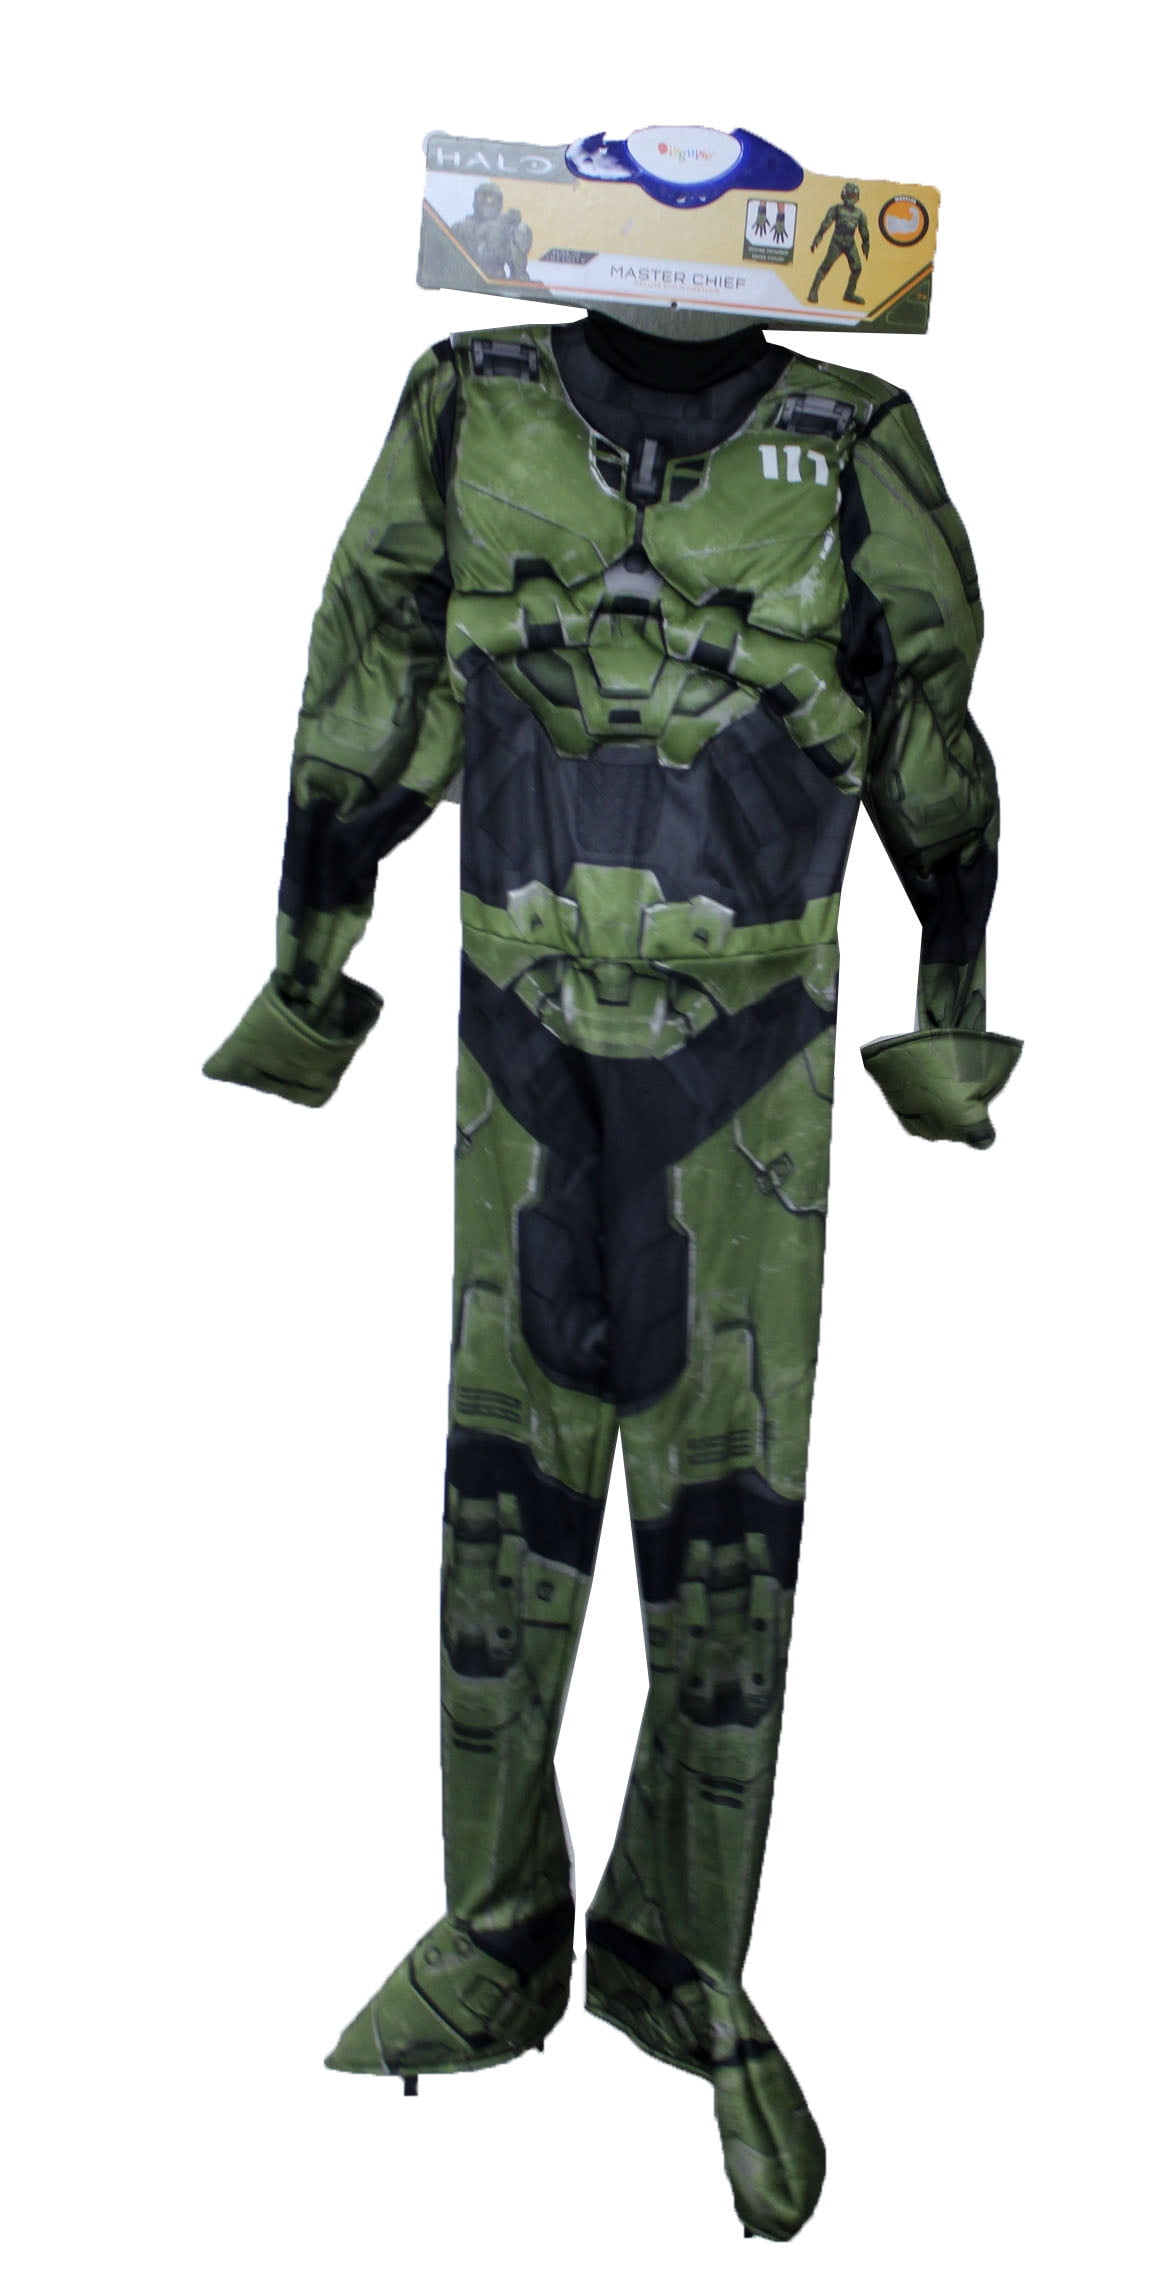 Disguise Halo Infinite Master Chief Deluxe Child Costume Medium 1 Count